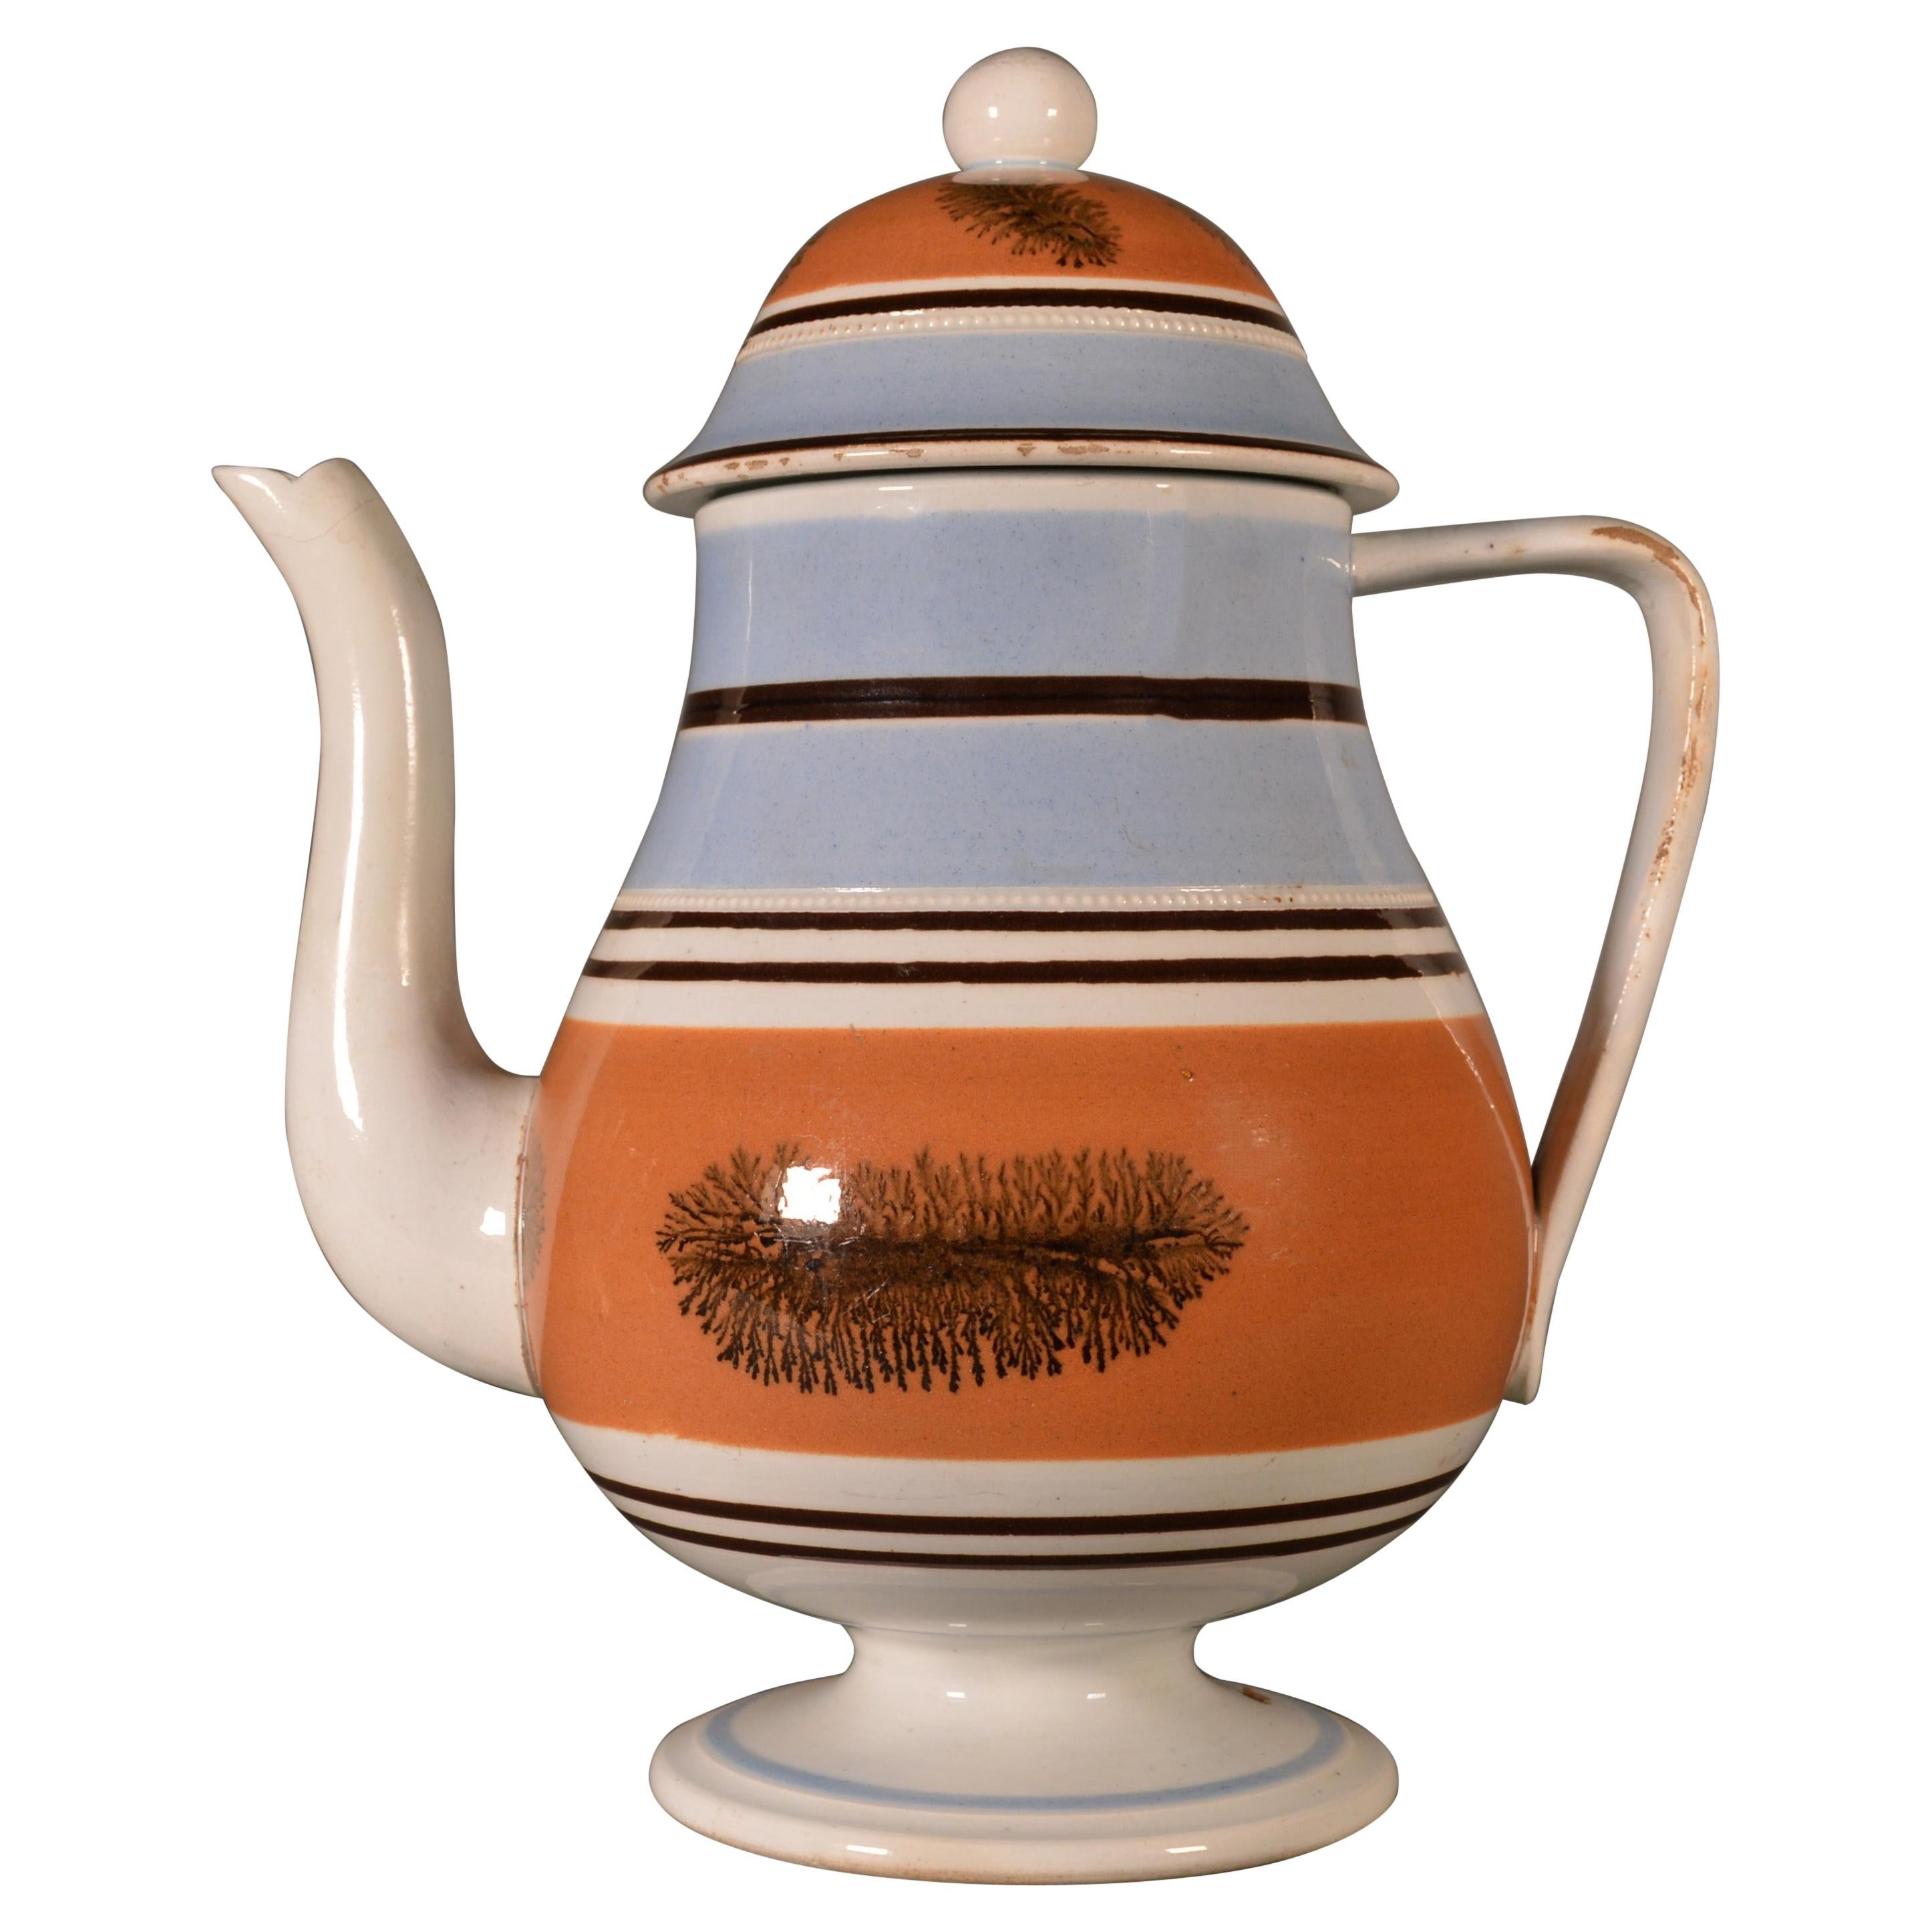 Mocha Seaweed Pottery Pearlware Coffeepot, circa 1800-1830